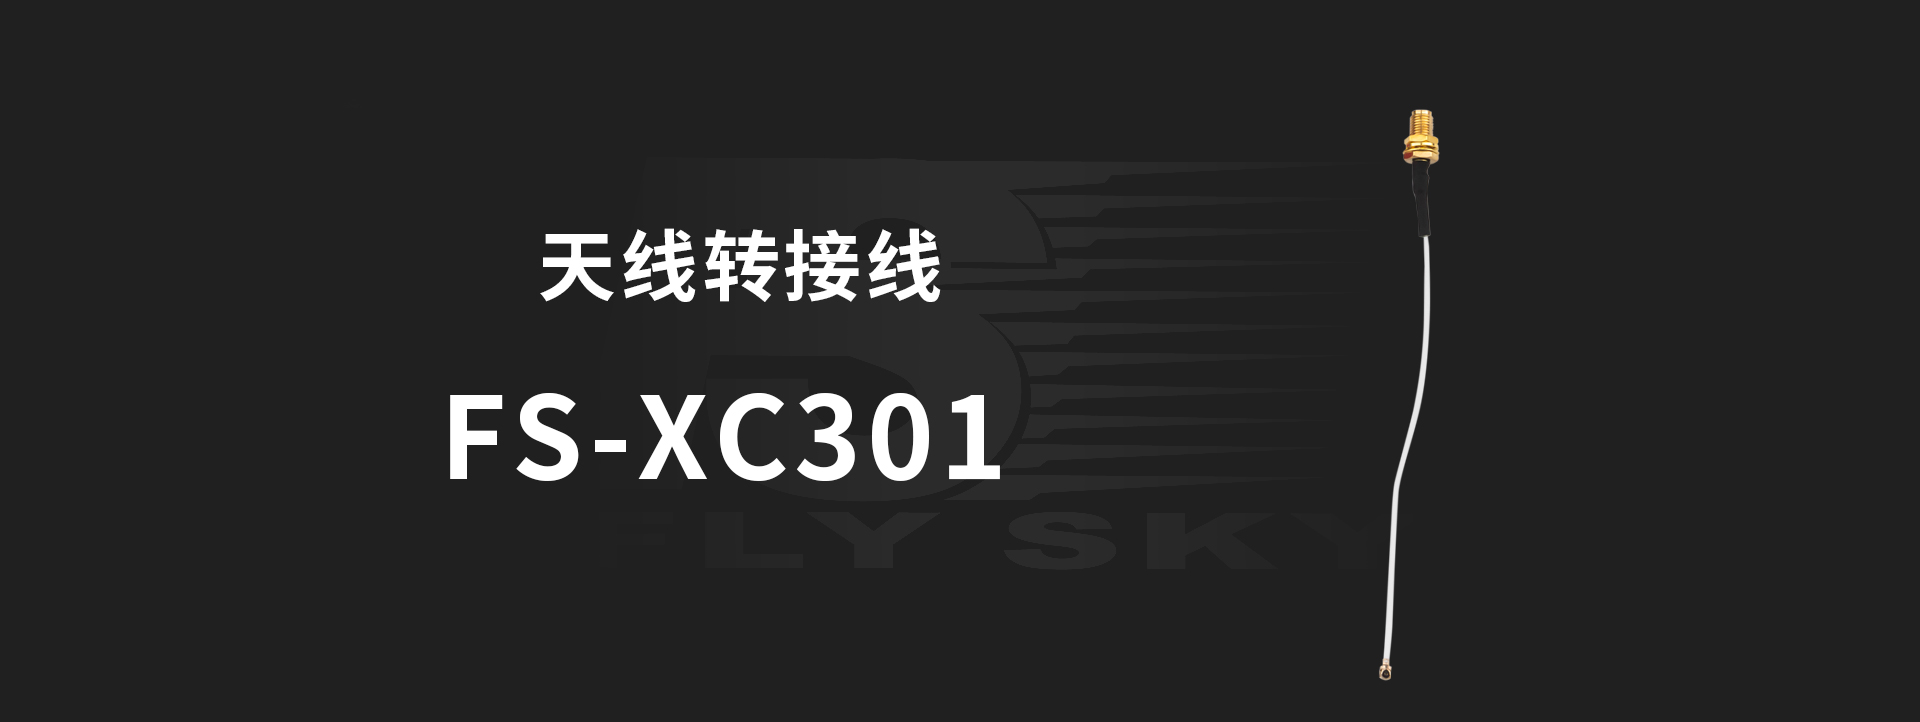 FS-XC301